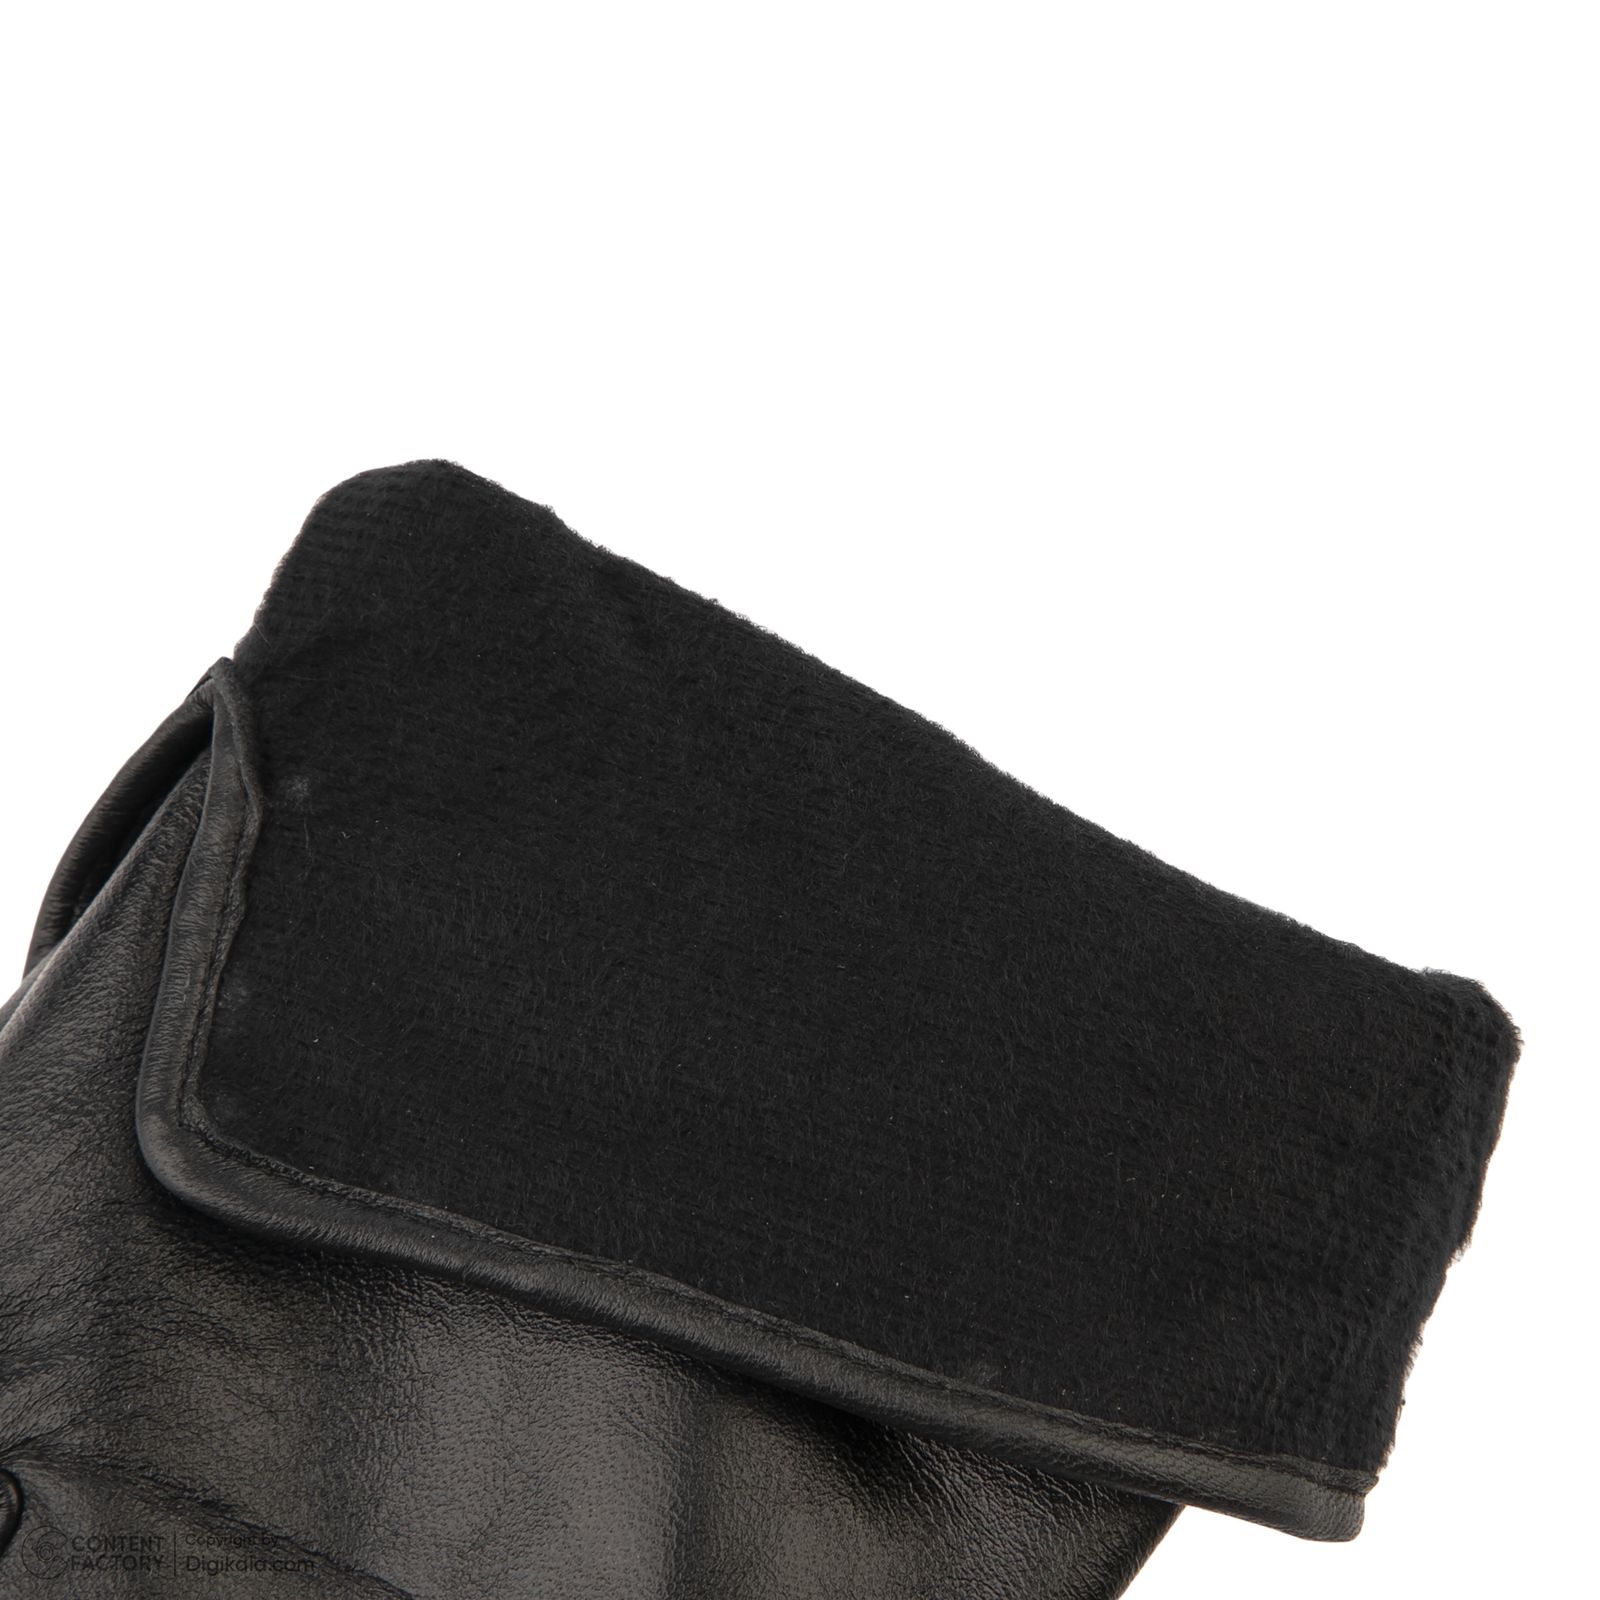 دستکش زنانه چرم لانکا مدل LGM-8 -  - 6